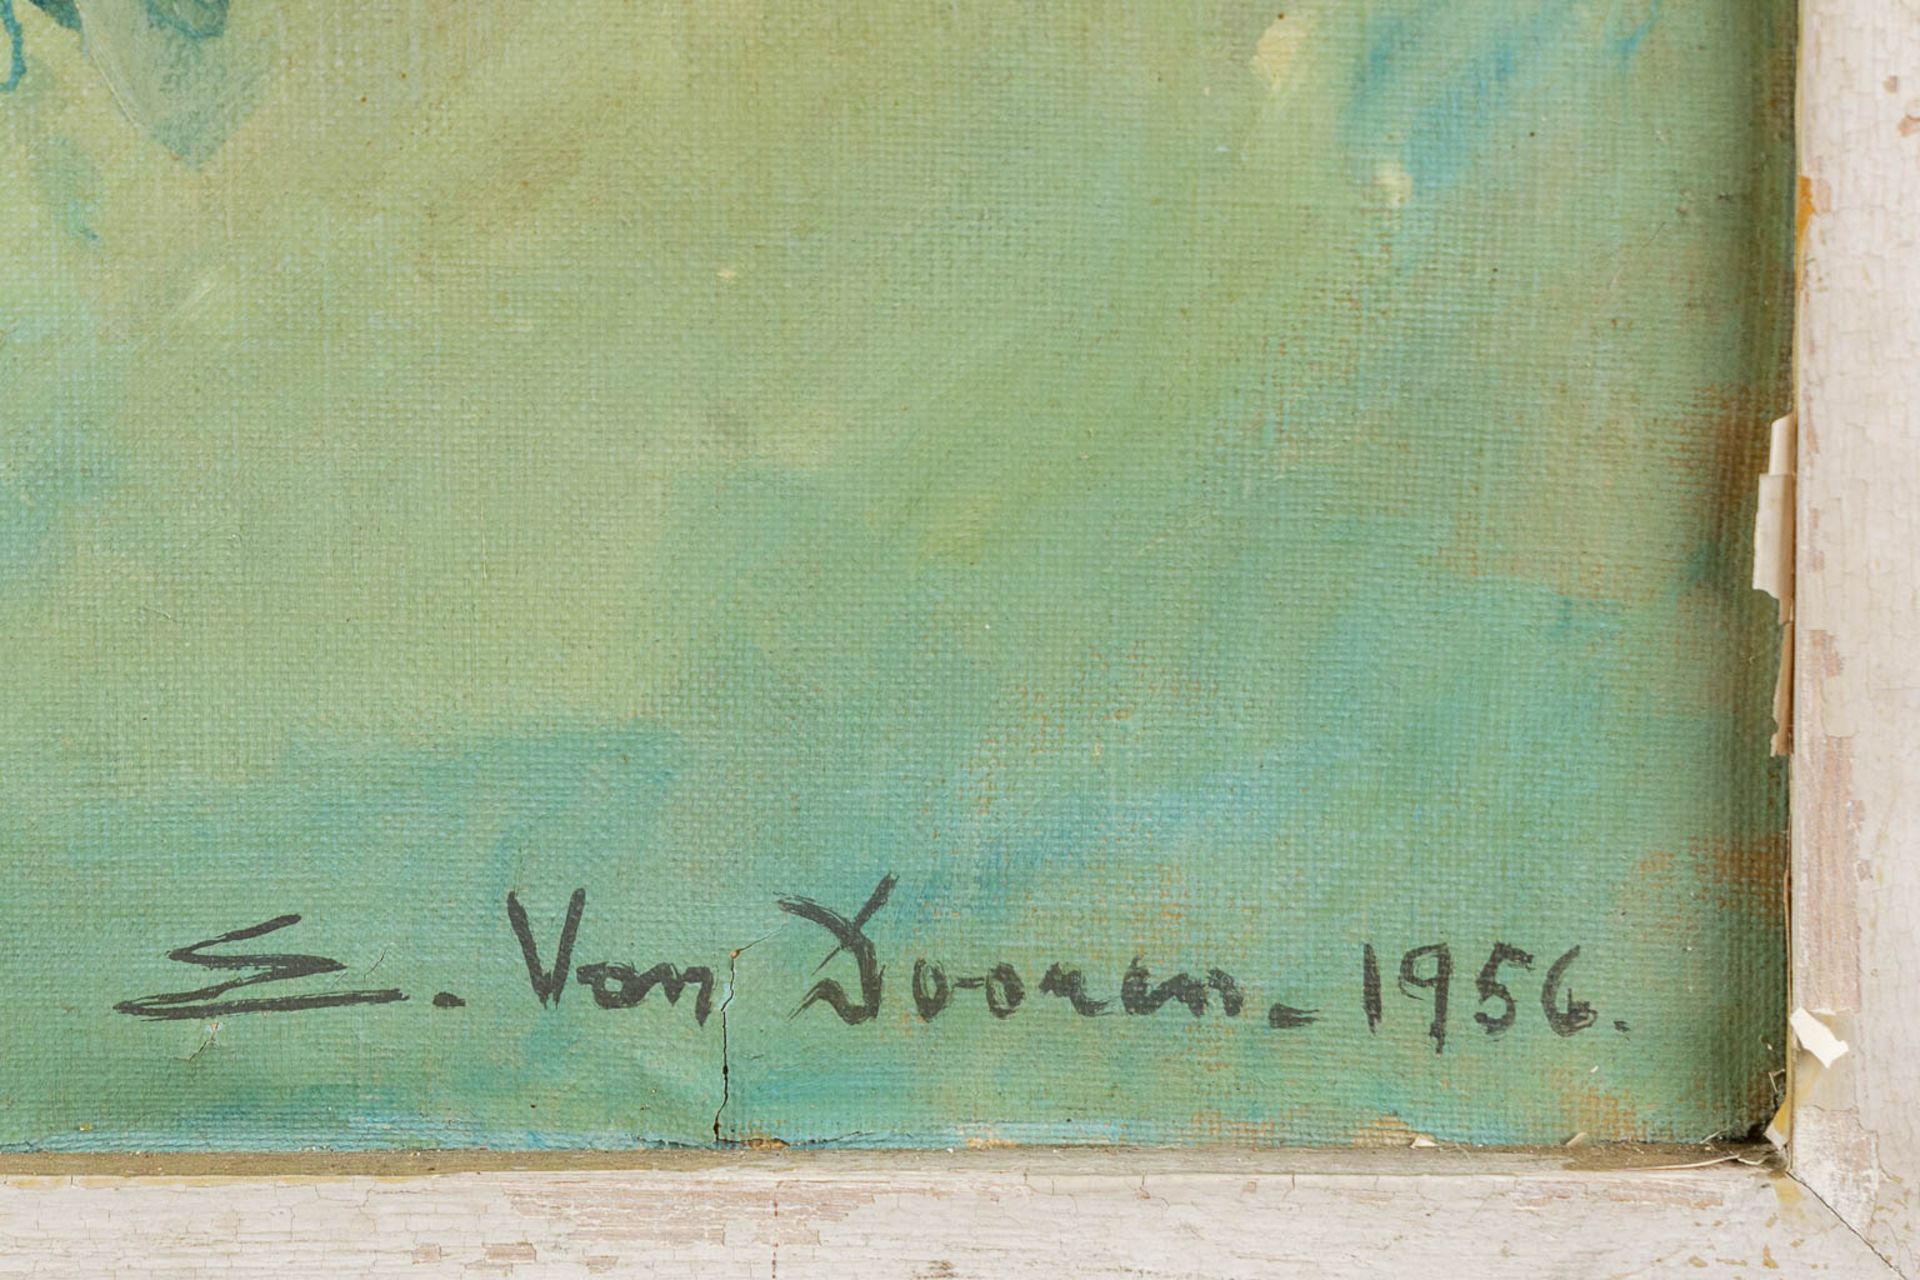 Edmond VAN DOOREN (1896-1965) 'Futuristic composition' oil on canvas. 1956. (W:120 x H:100 cm) - Image 9 of 11